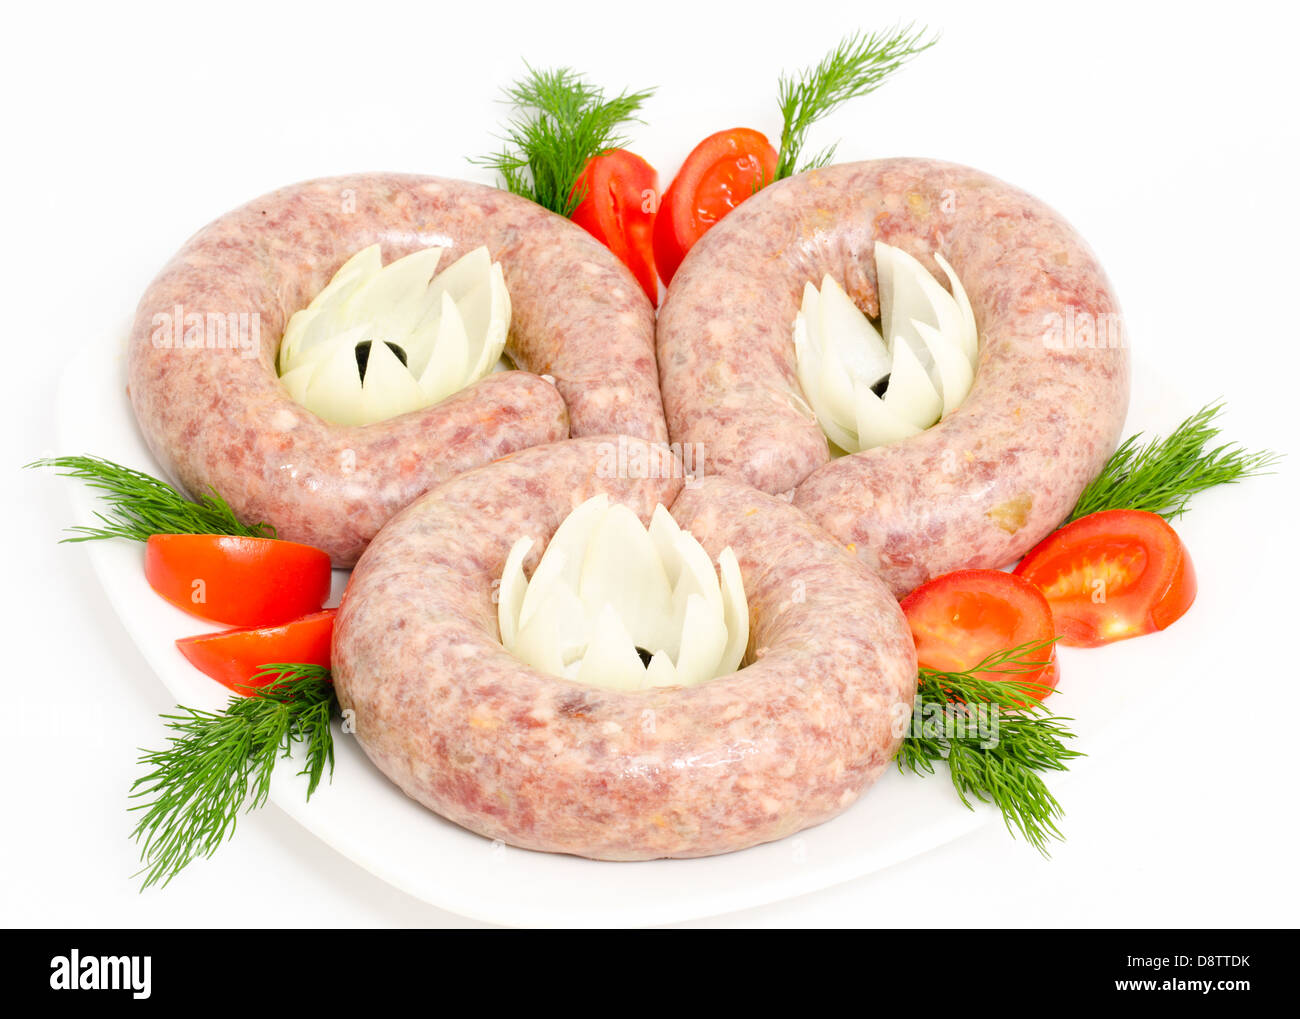 sausages - prepared food Stock Photo